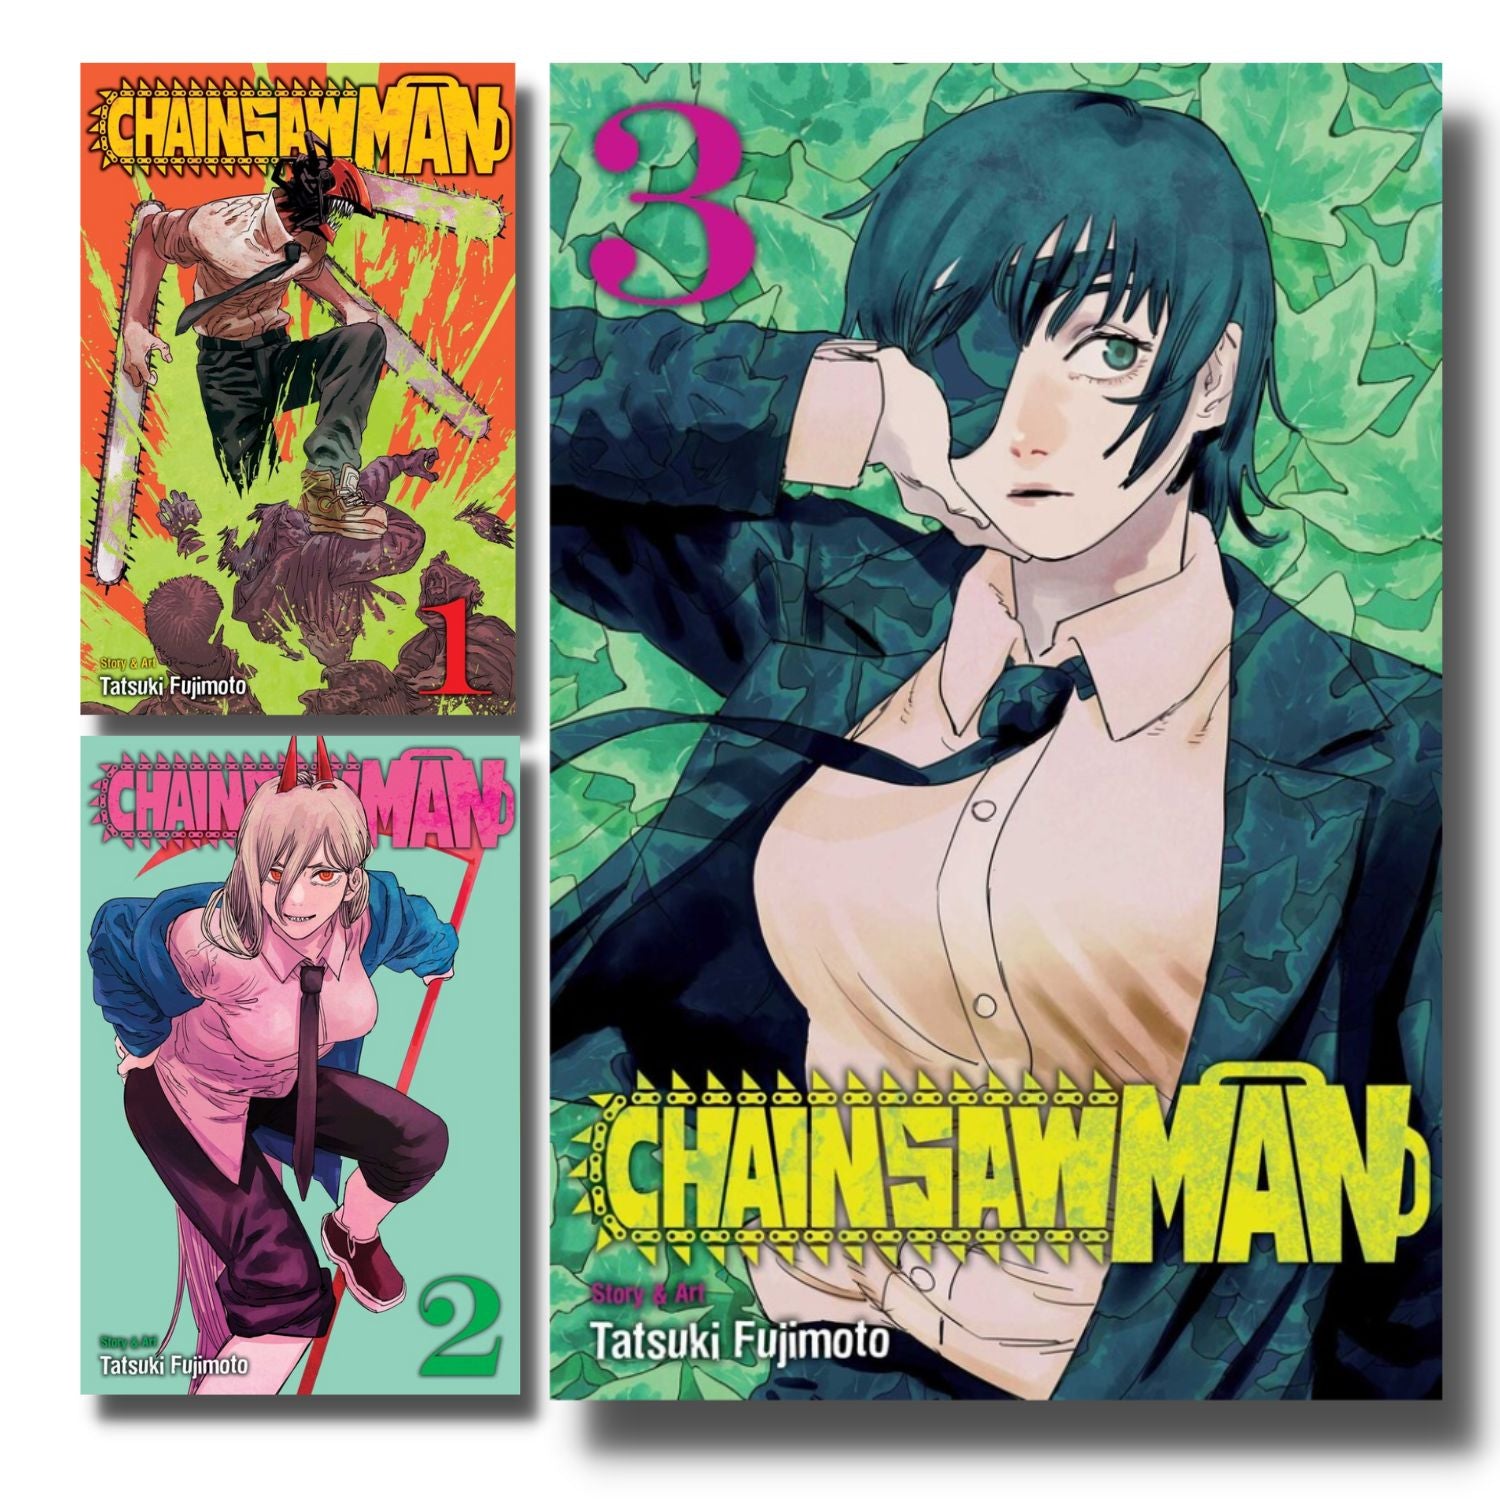 Chainsaw Man: Chainsaw Man, Vol. 2 (Series #2) (Paperback)